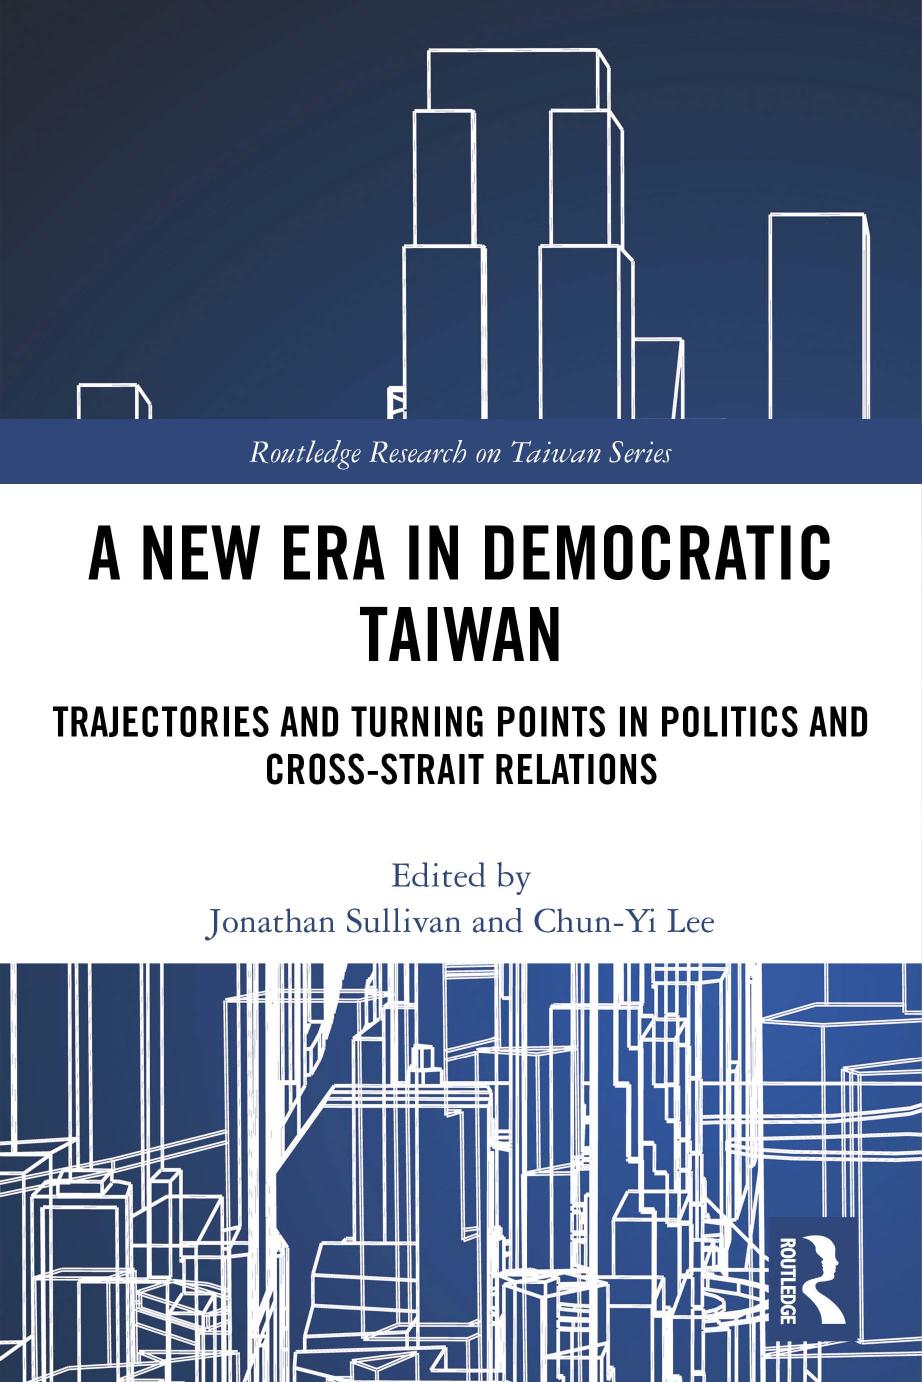 A New Era in Democratic Taiwan by Jonathan Sullivan